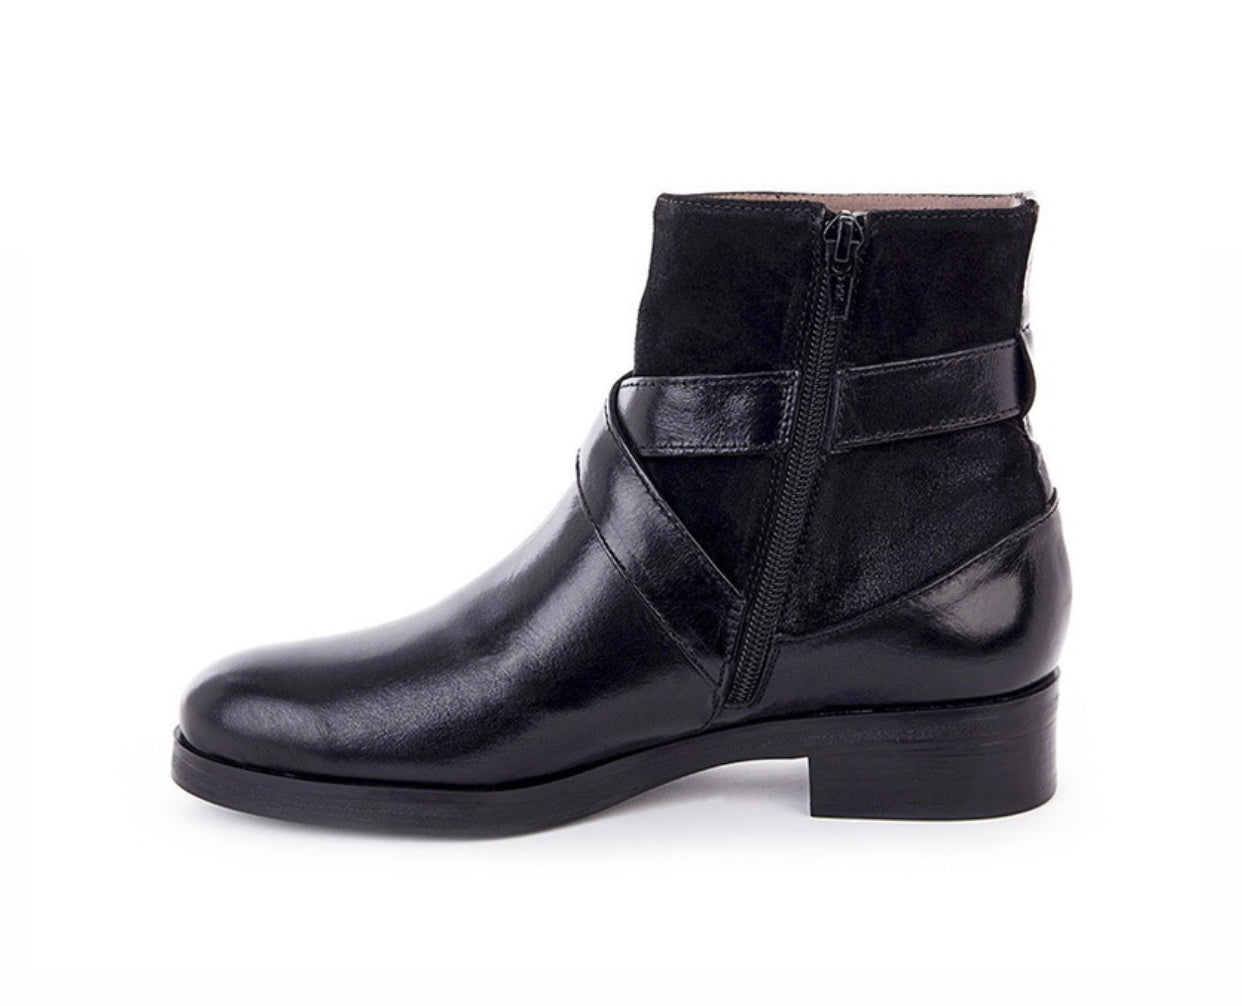 Wonders C-4105 Black Leather Buckle Zip Ankle Boot Made In Spain